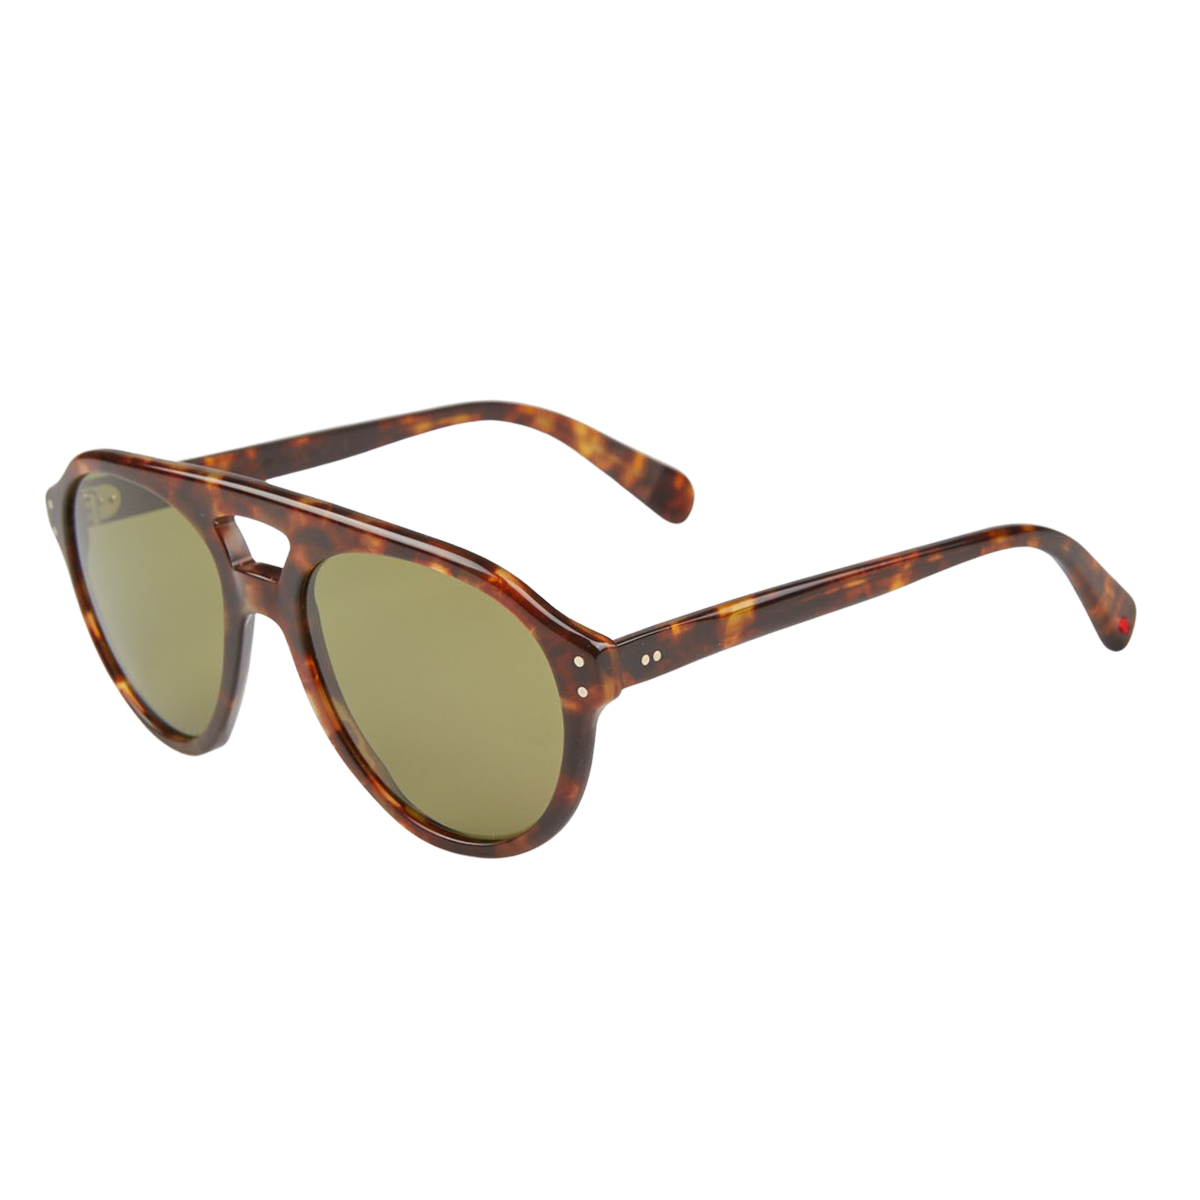 Lunettes Alf Brown Tortoise A22.15.006 Sunglasses Feature